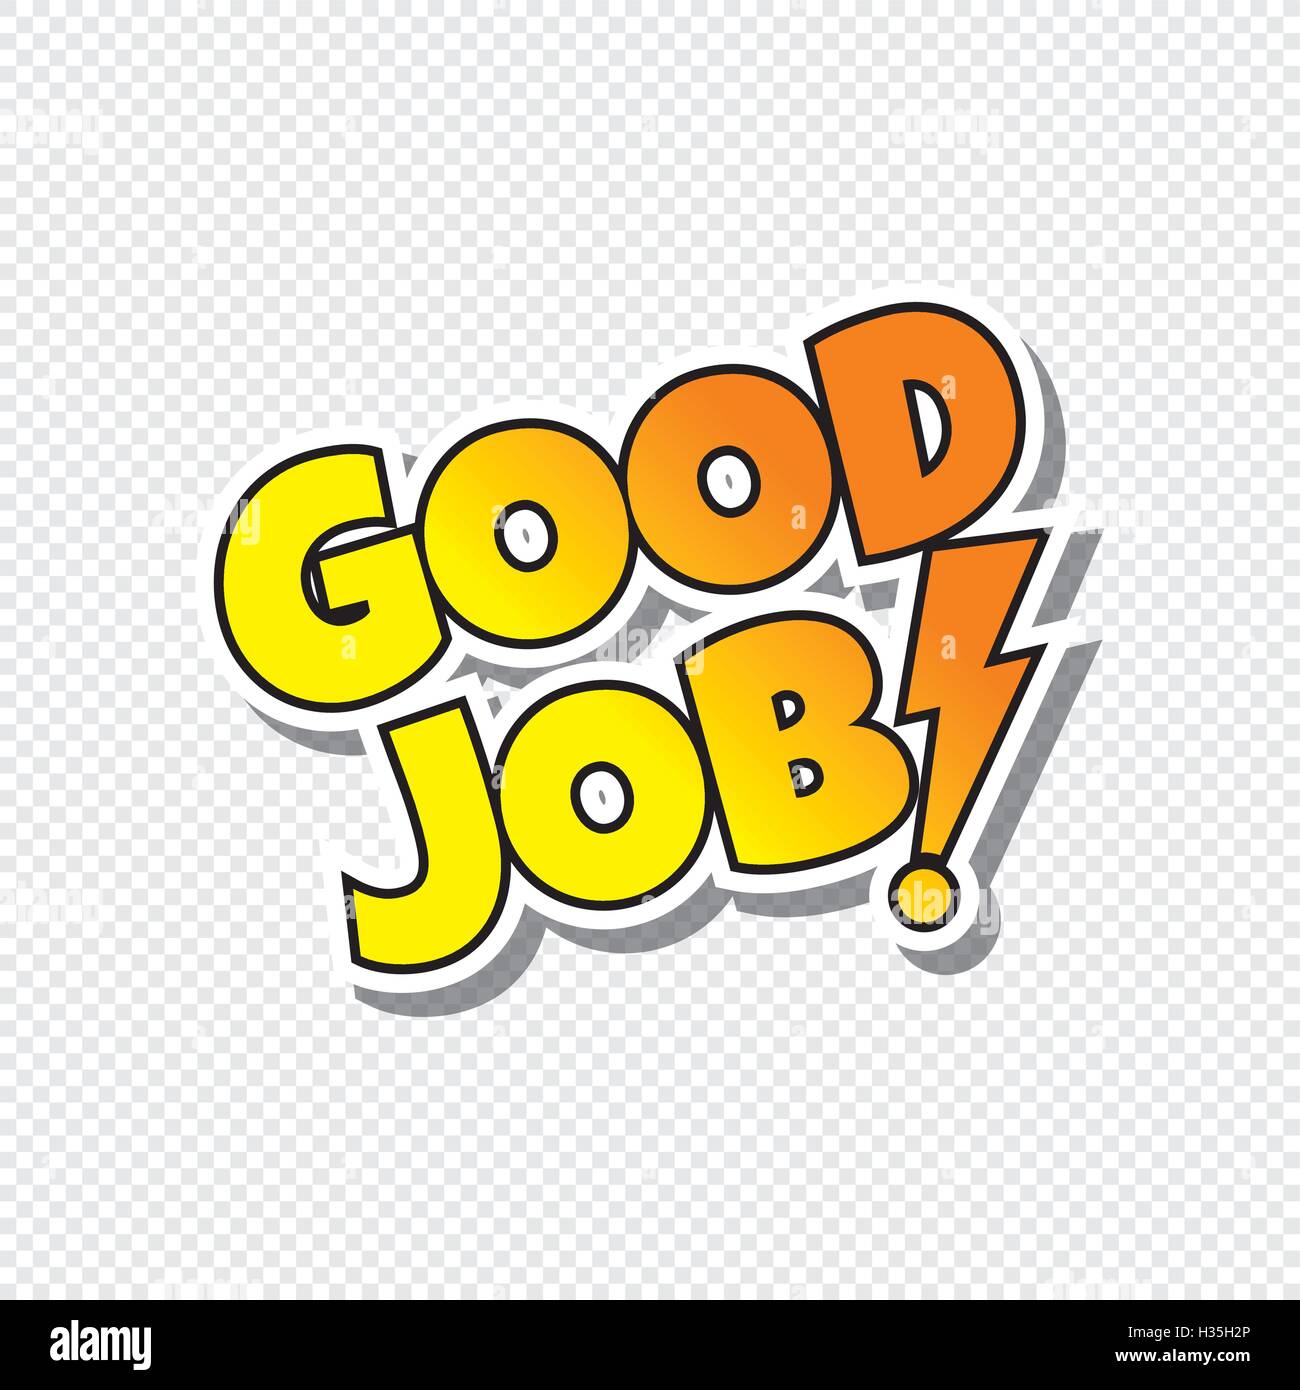 Good Job Cartoon Text Sticker Stock Vector Art Illustration